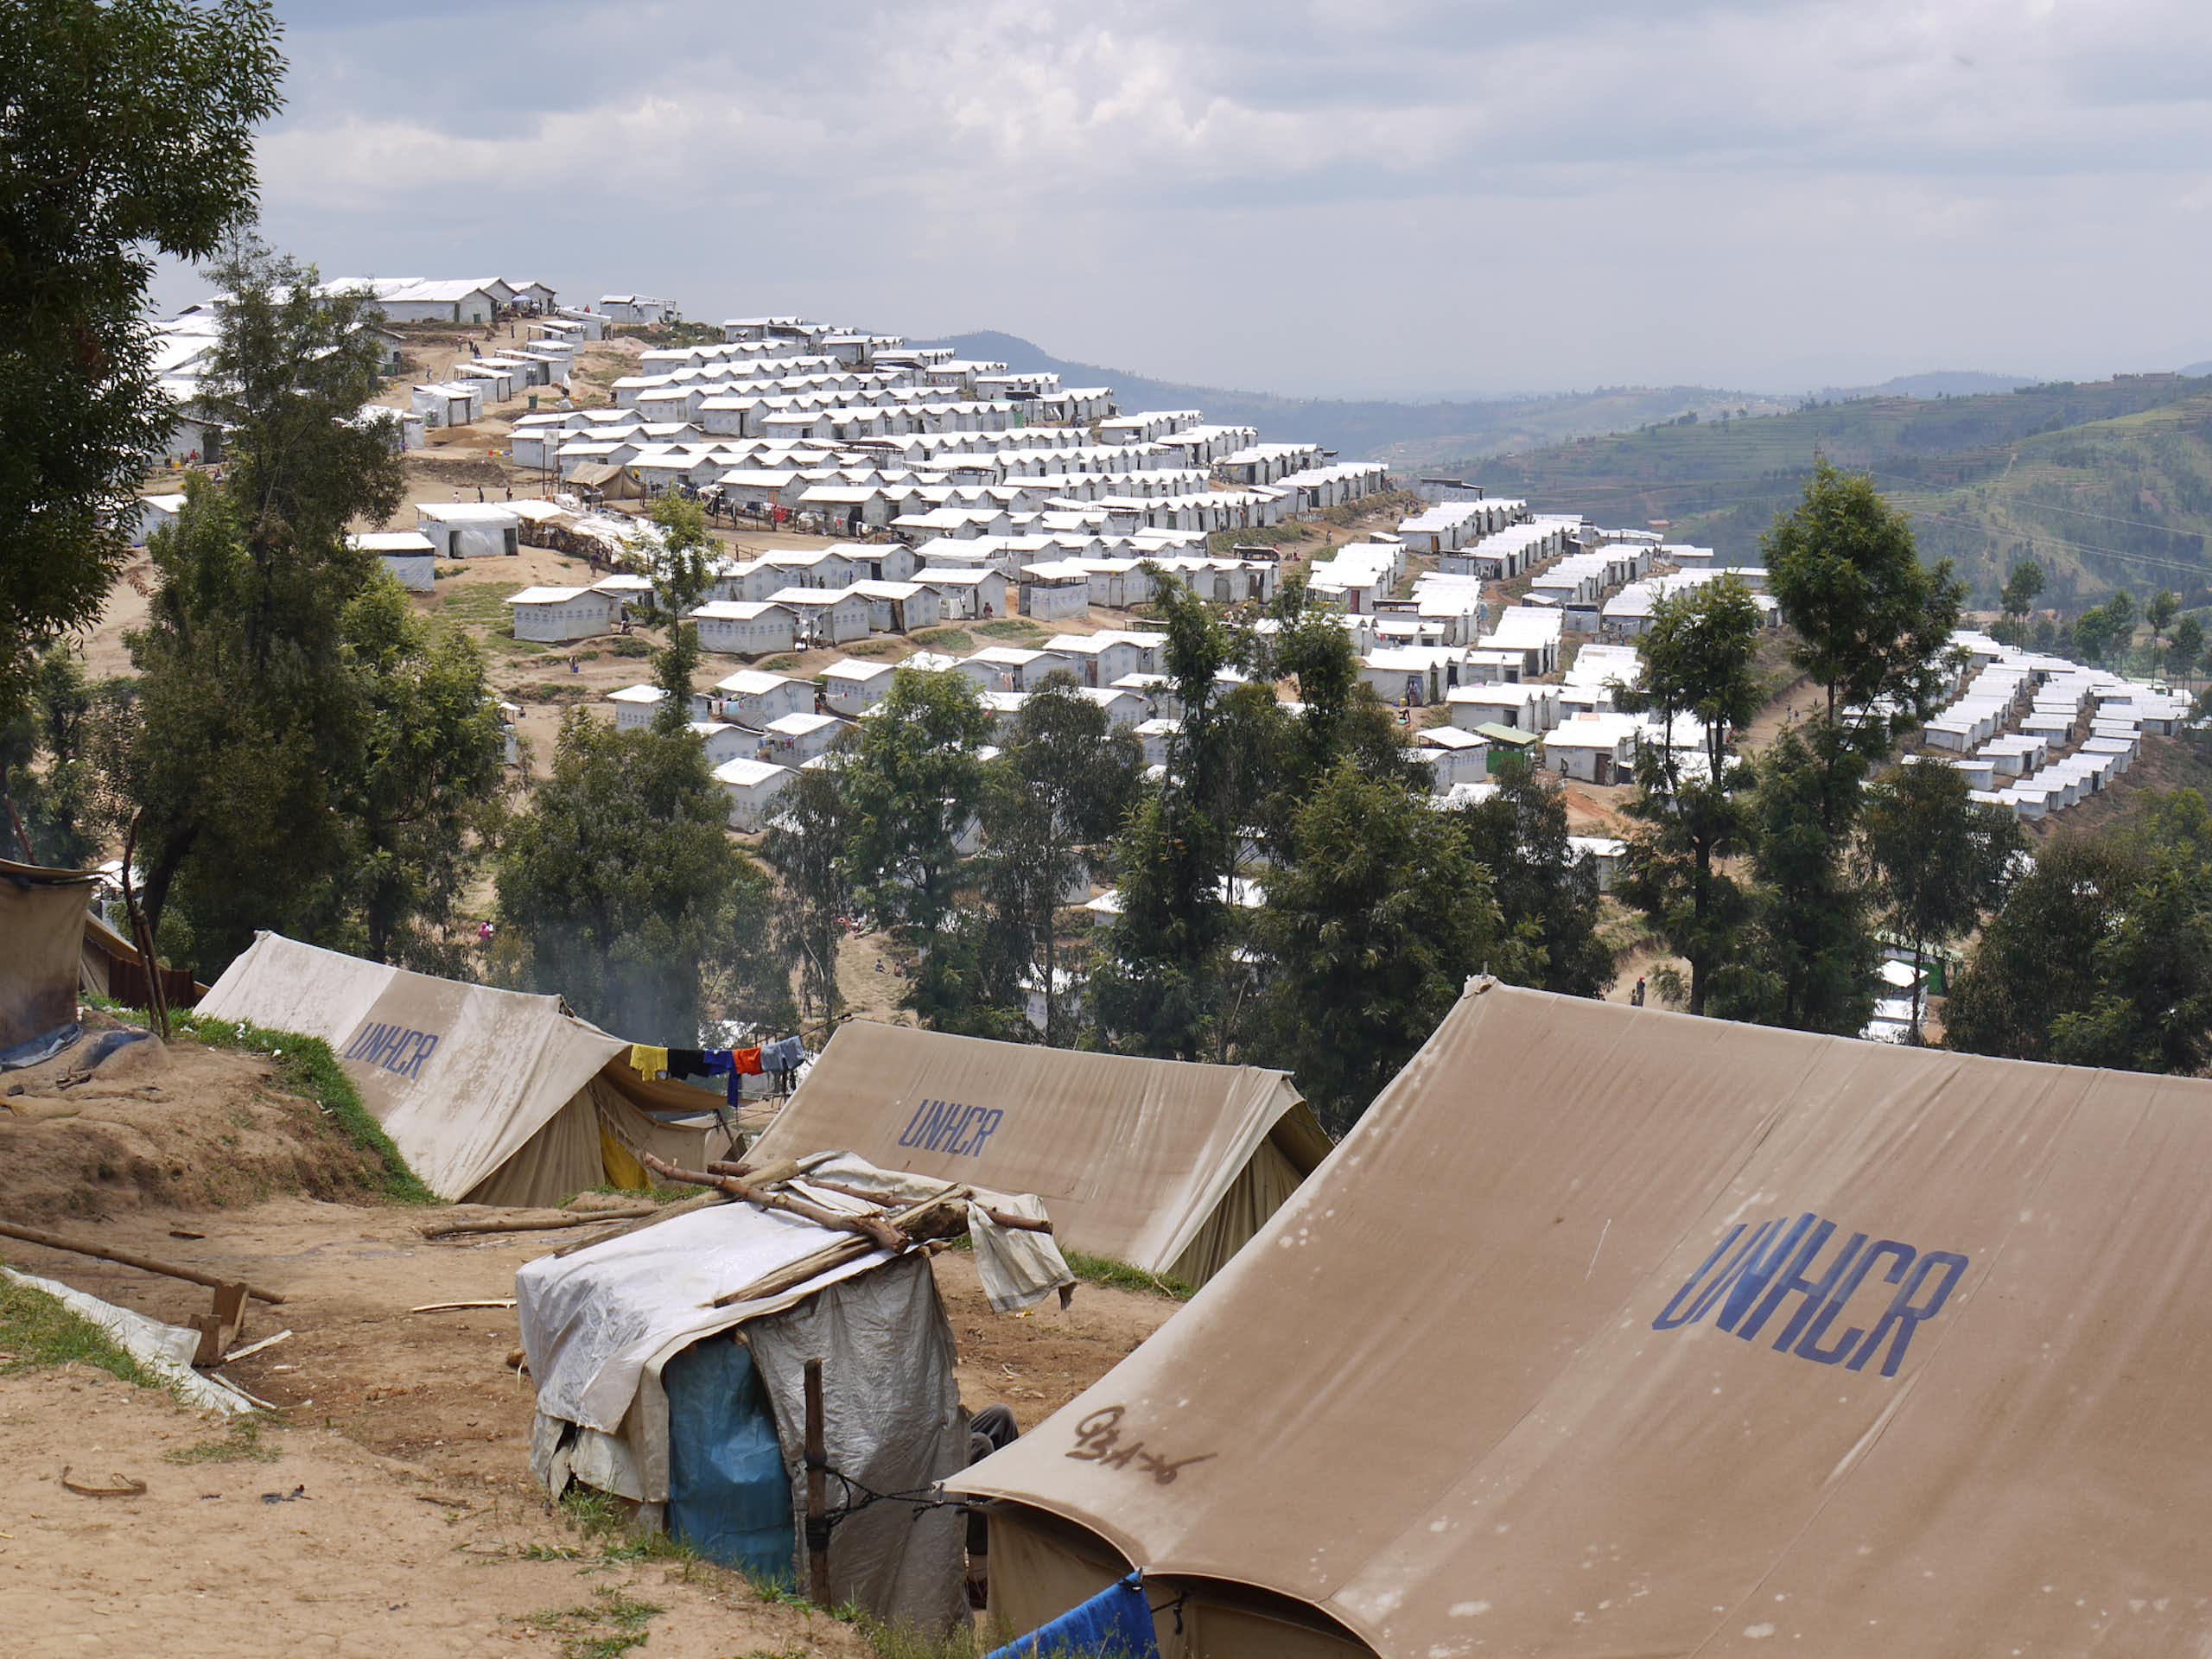 Taking stock of Rwanda as a host for refugees